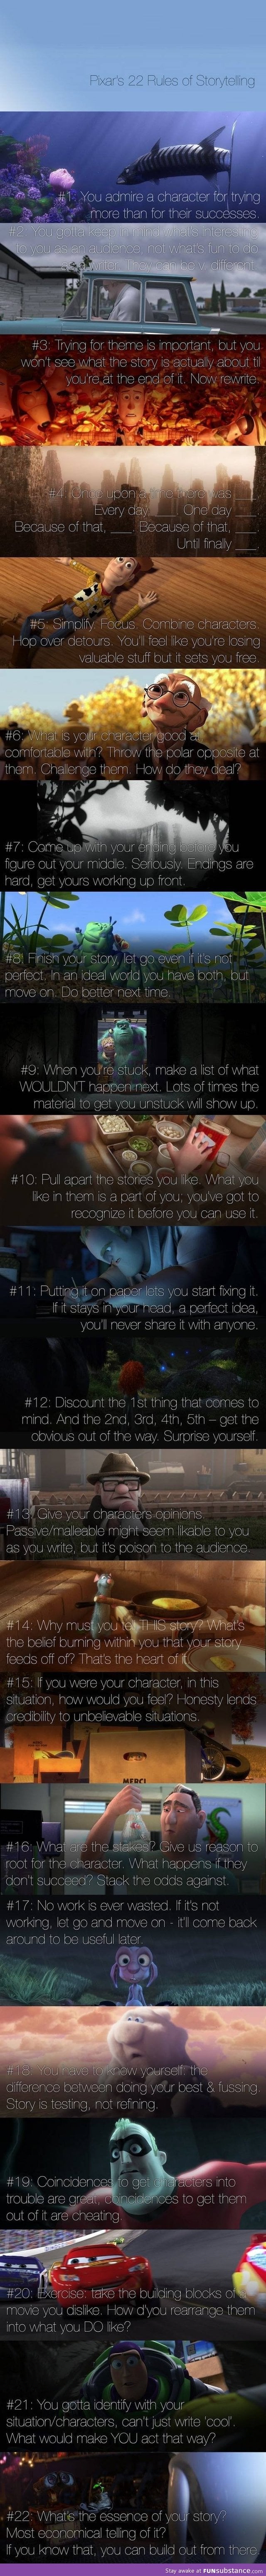 Pixar's rules for story storytelling